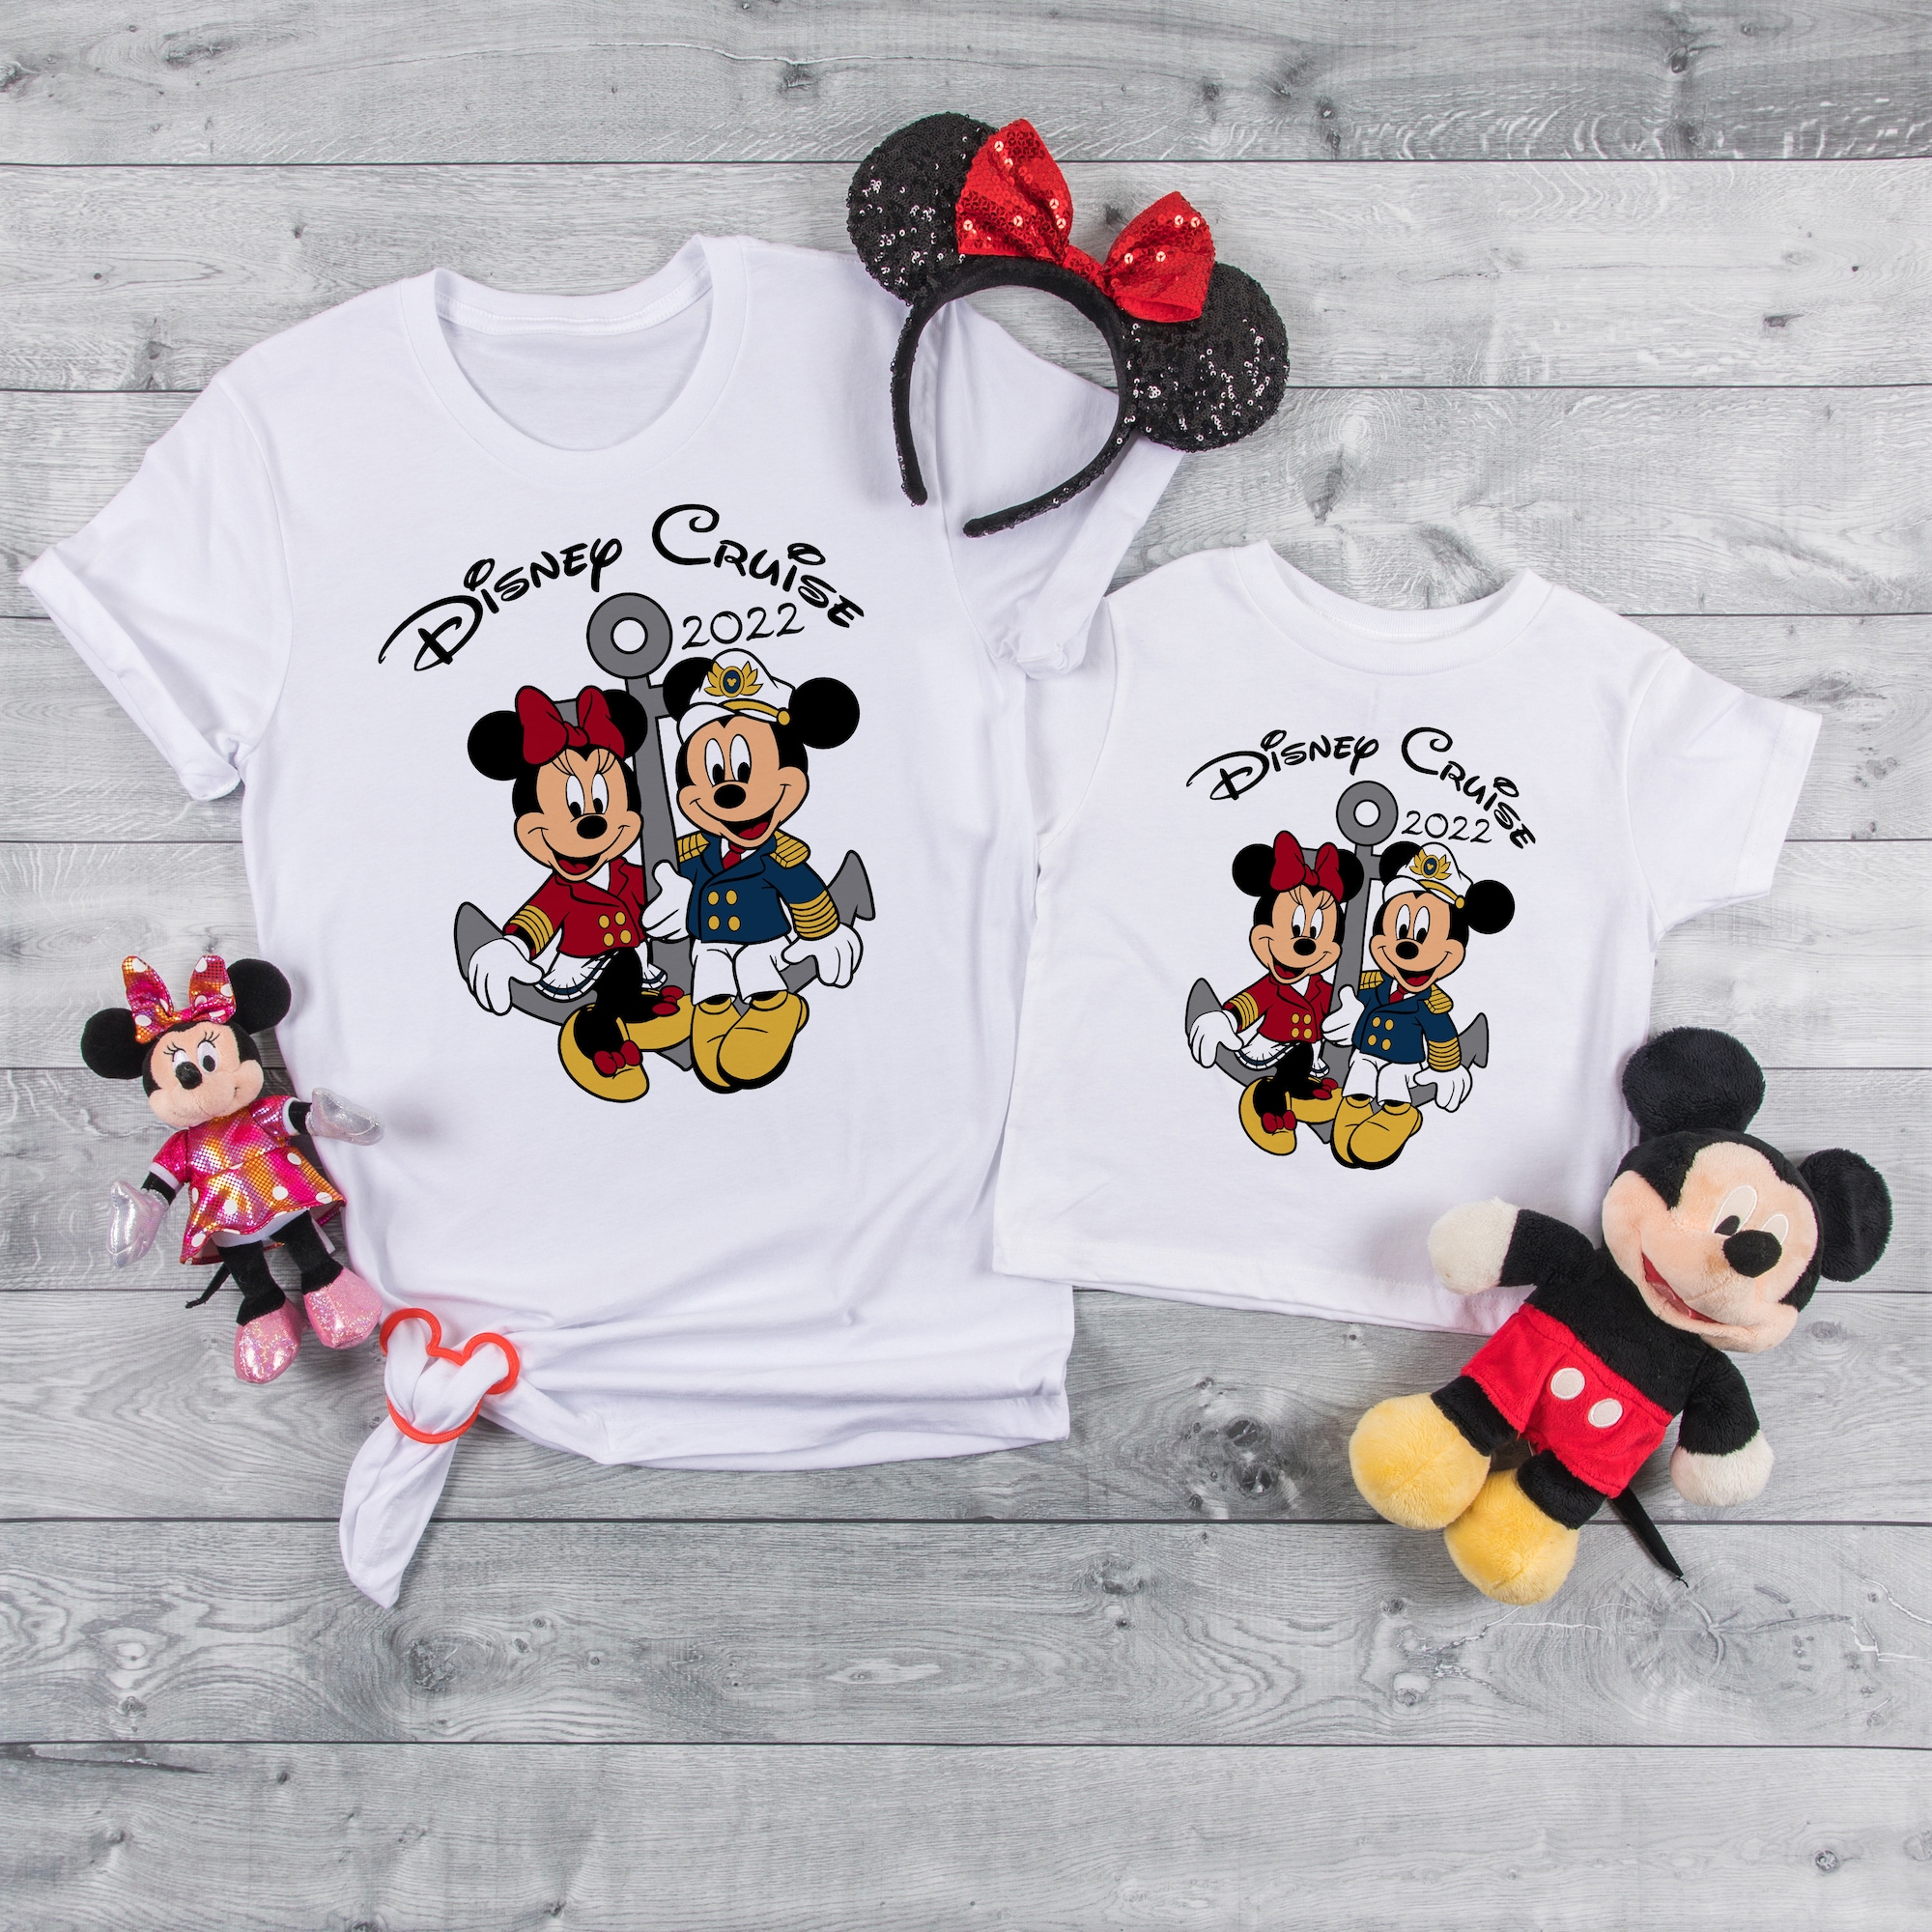 Disney Cruise Shirts 2022 | Disney Family Shirts 2022 | Matching Disney Shirts | Disney Trip 2022